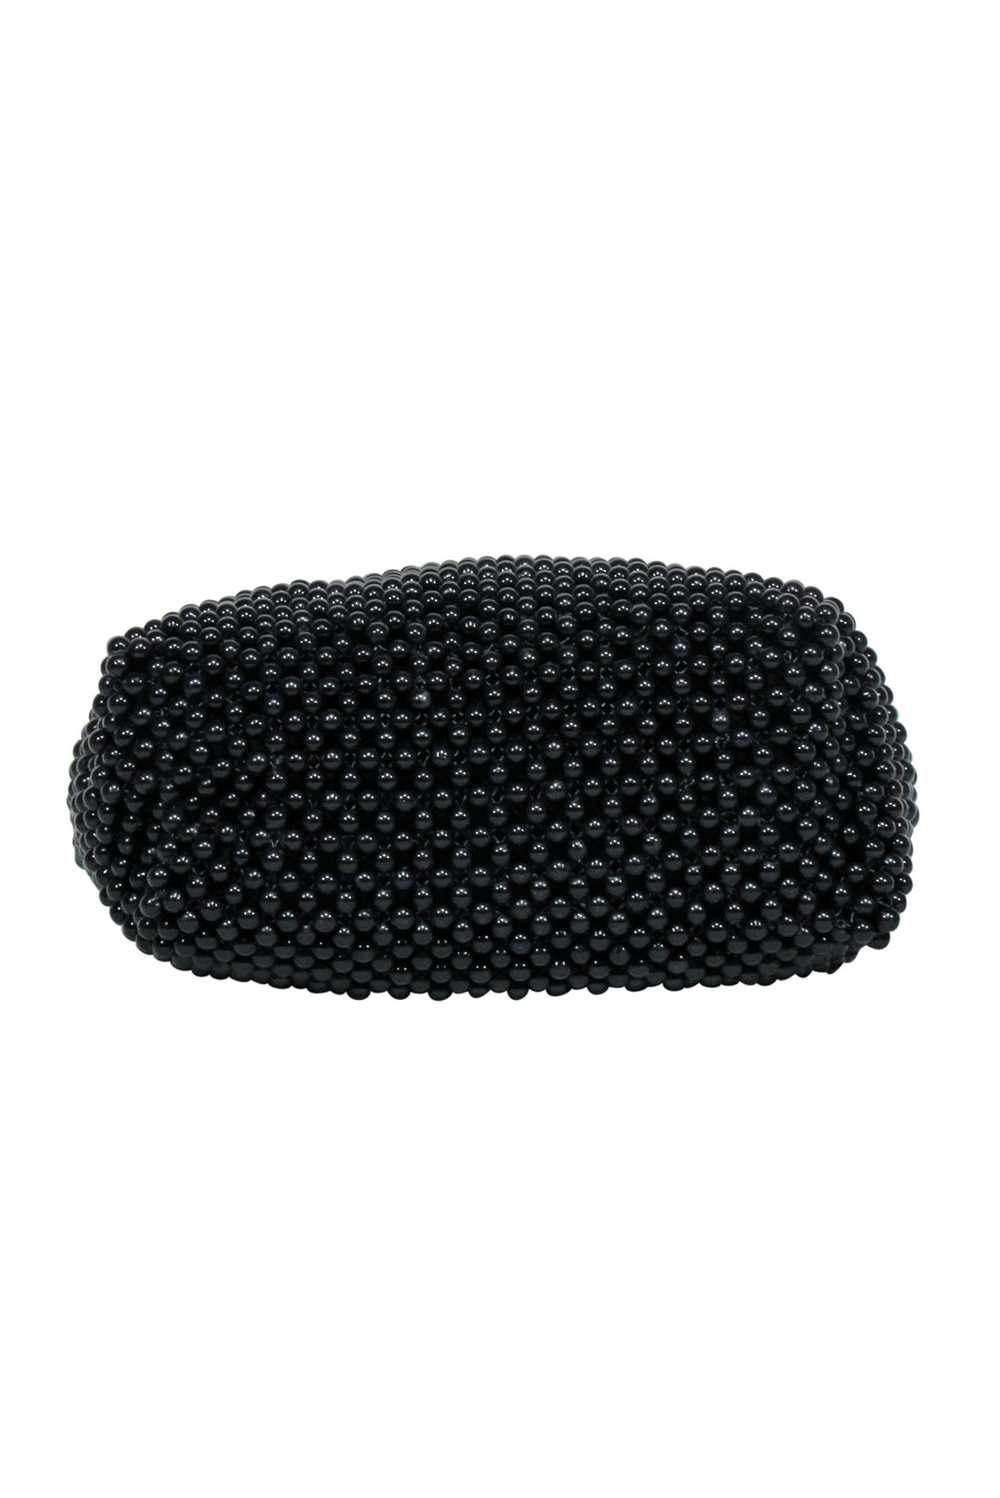 Cleobella - Black Beaded Handbag w/ Marble Handles - image 4